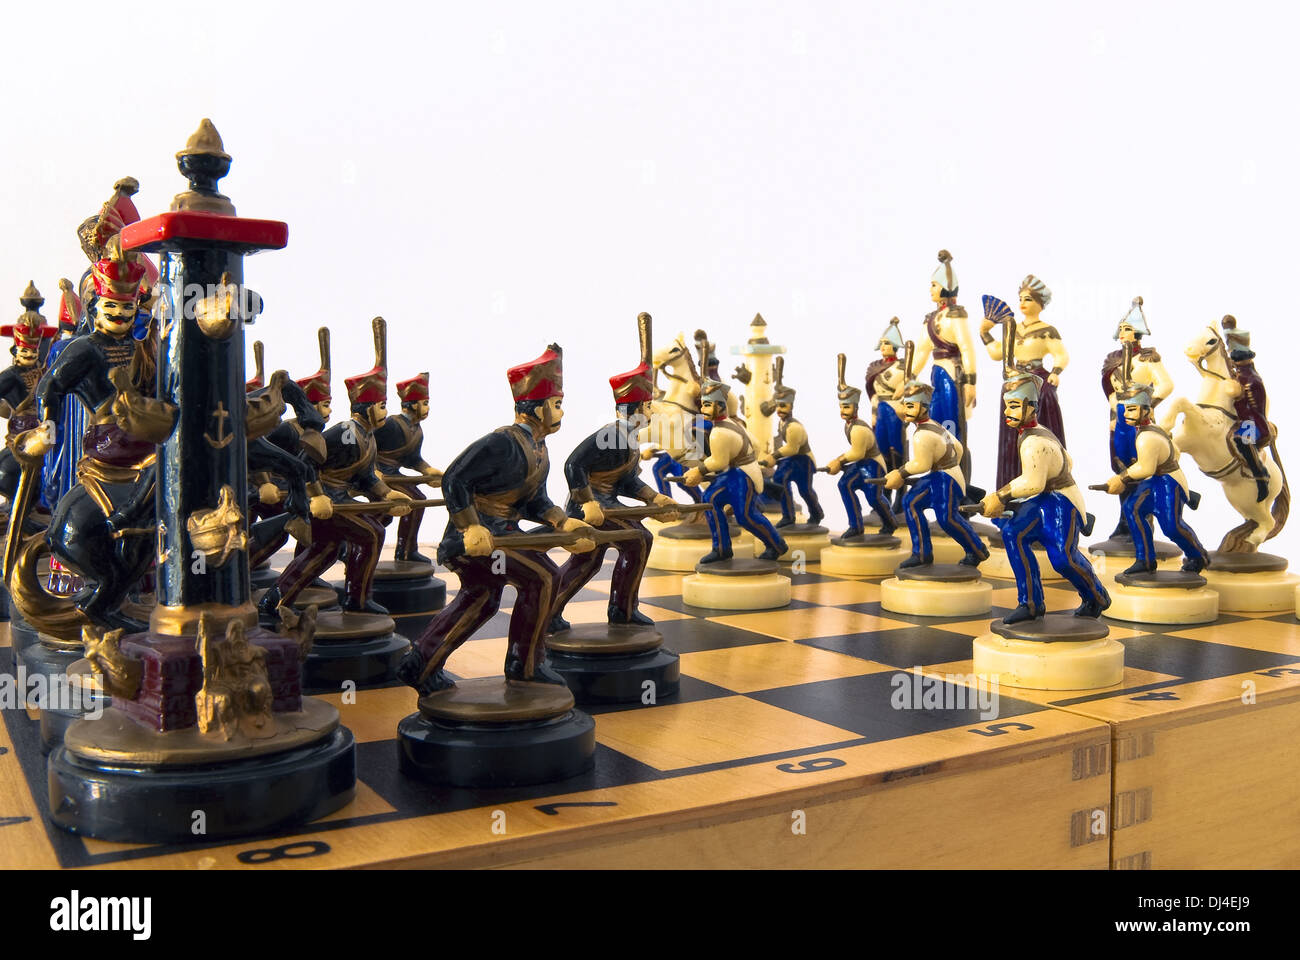  iChess.net Insane Chess Sacrifices - Empire Chess : Toys & Games